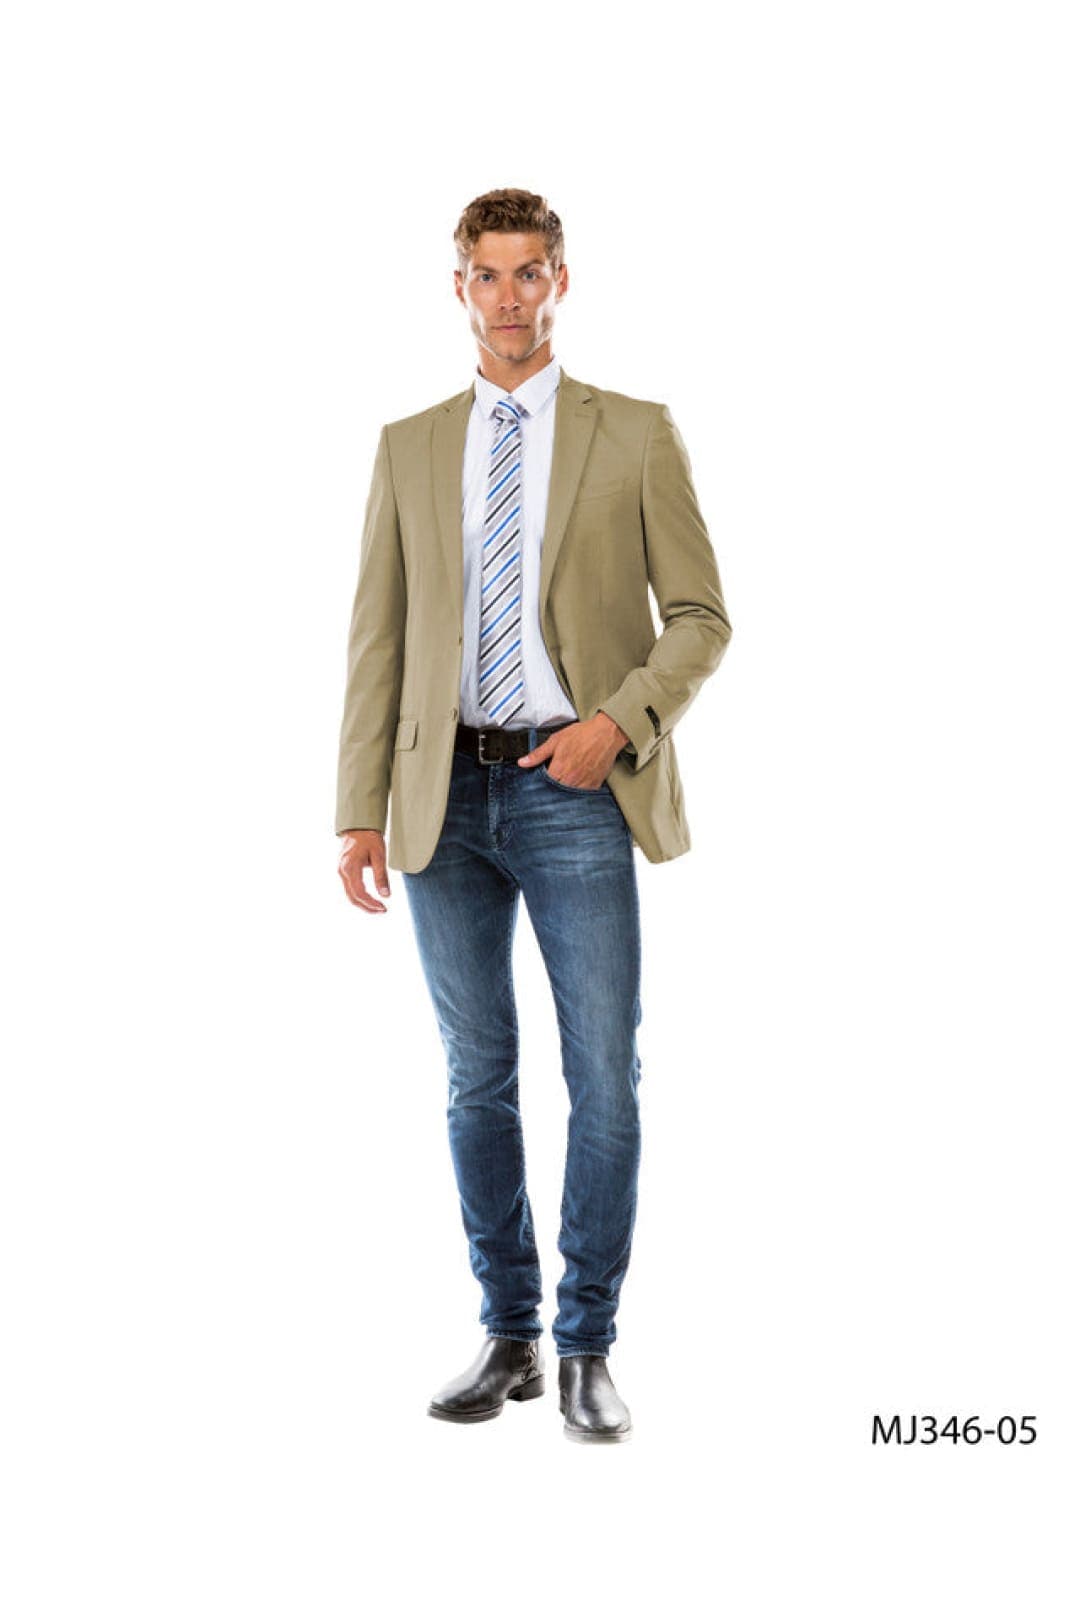 Tan Zegarie Suit Separates Solid Dinner Jacket For Men MJ346-05 - Tan / 34R / MJ346-05 - Suit-separates